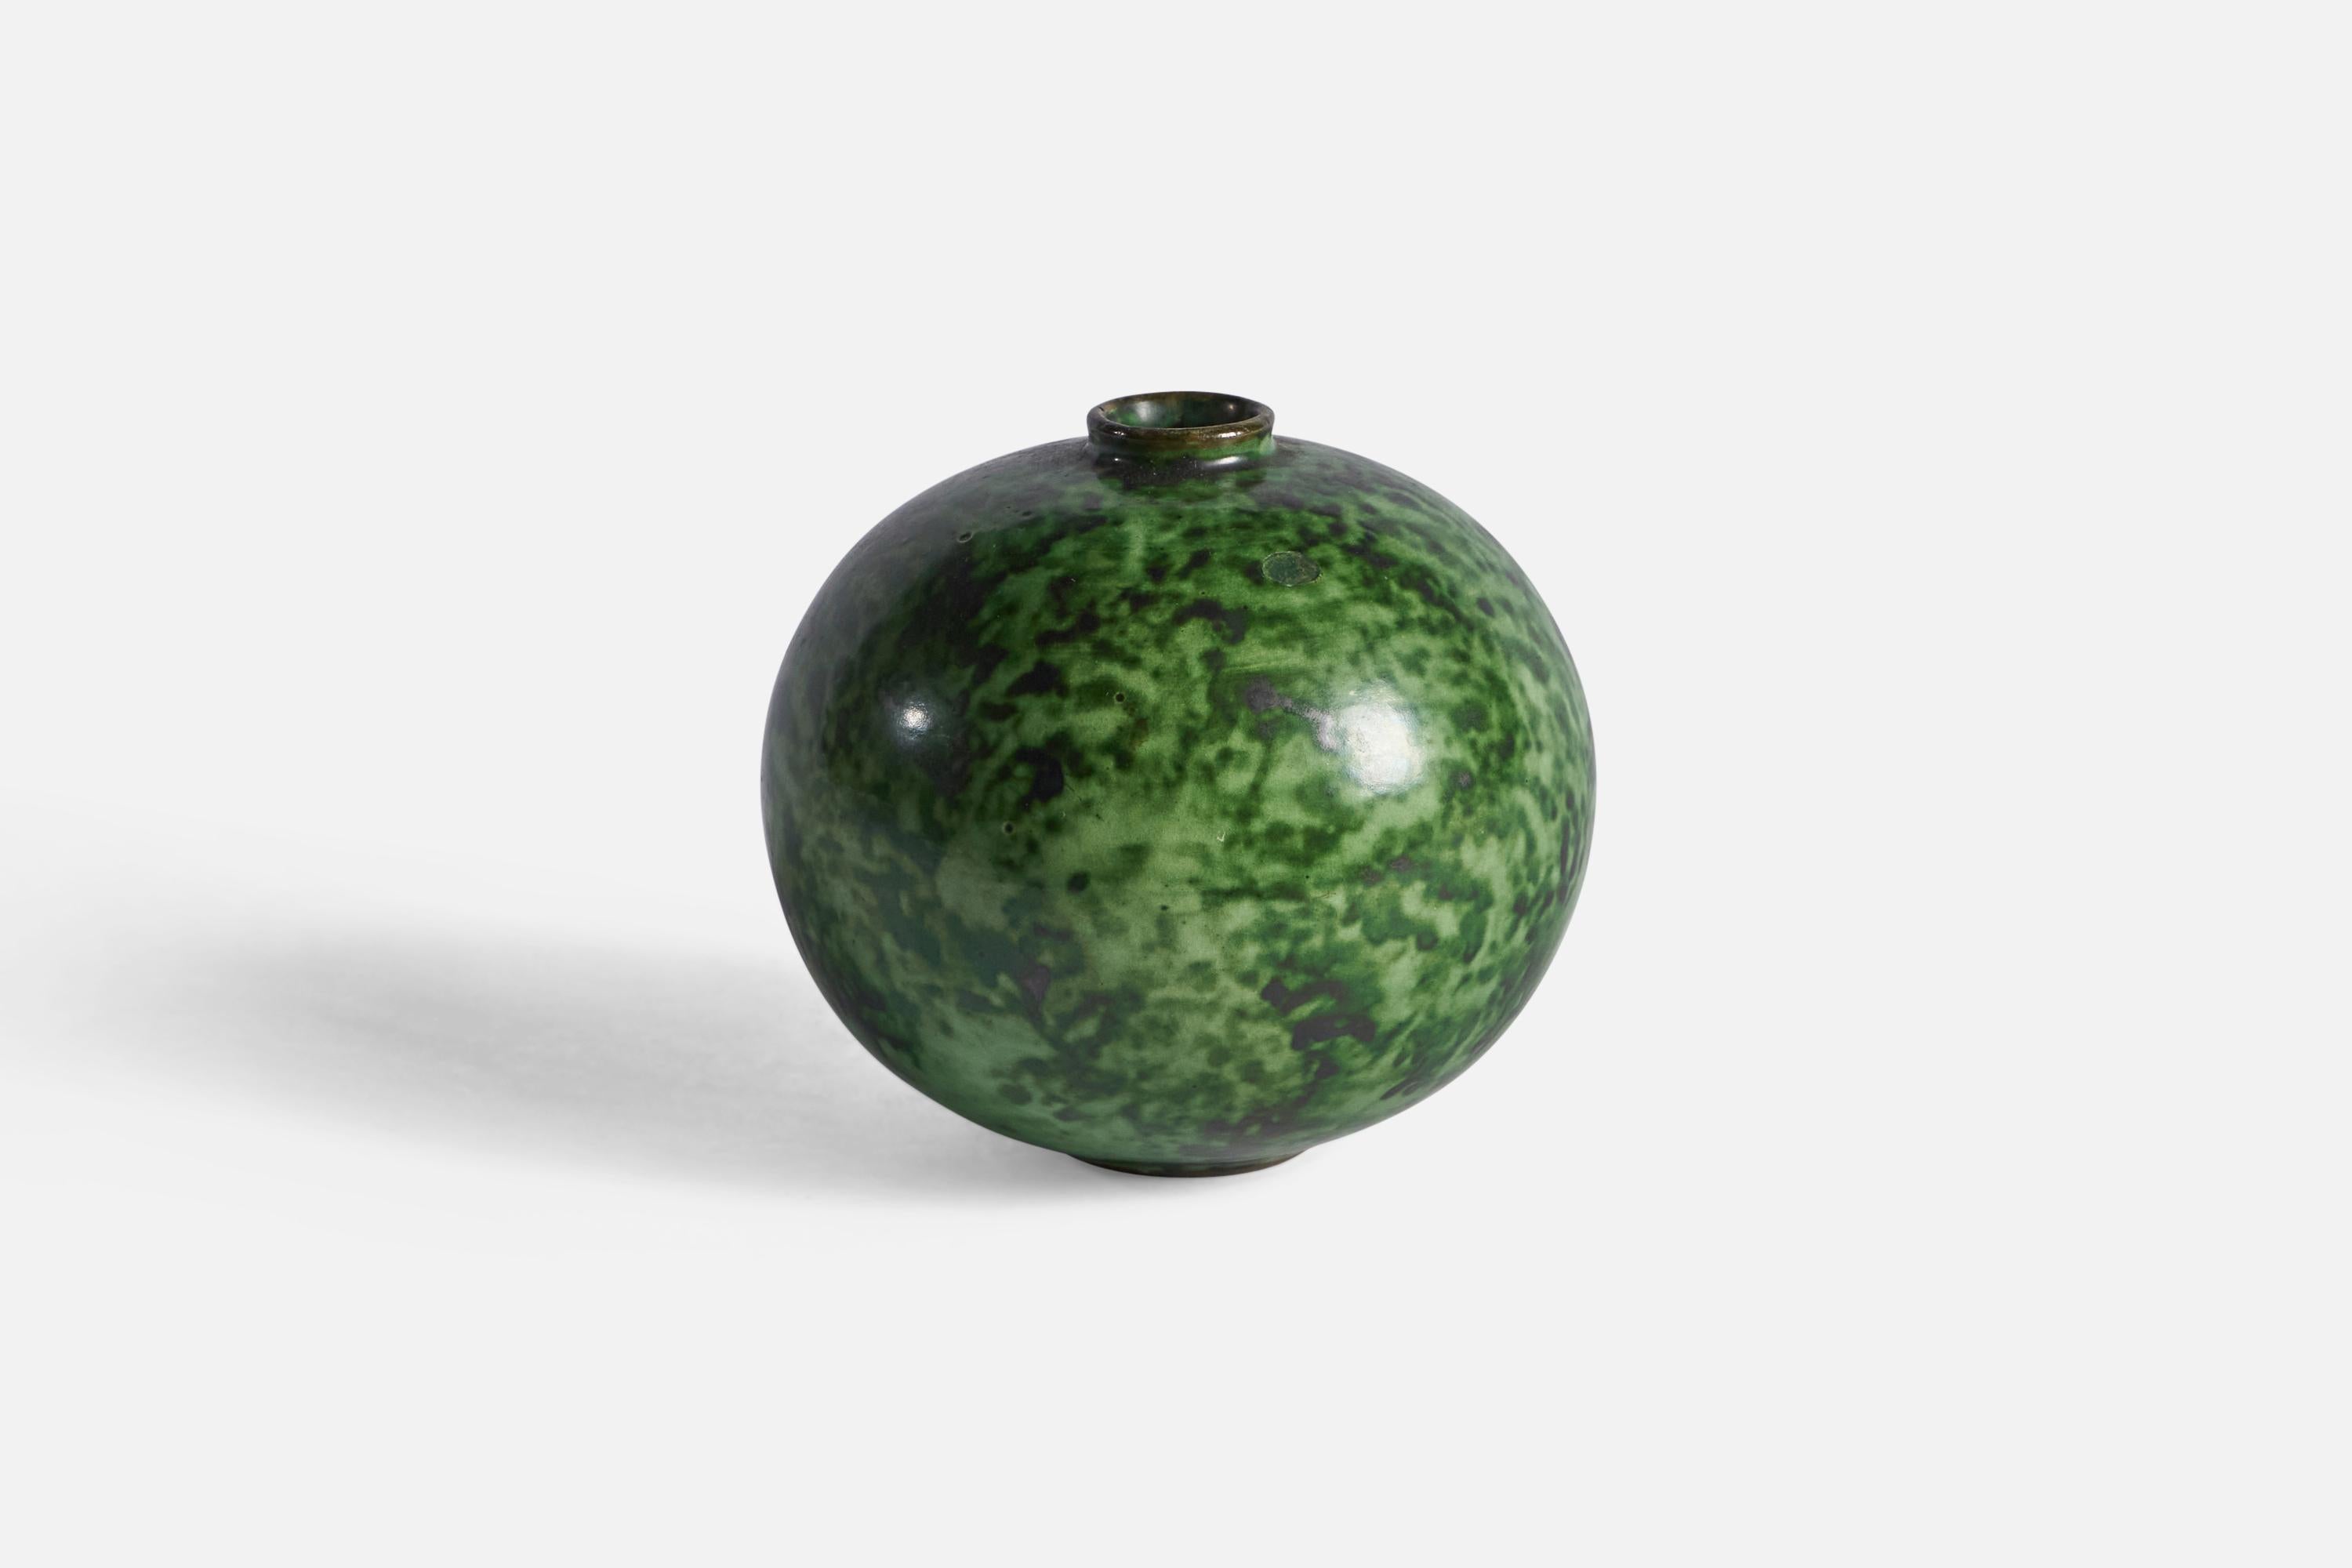 A green-glazed earthenware vase designed by Erik Mornils and produced by Nittsjö, Sweden c. 1930s.

